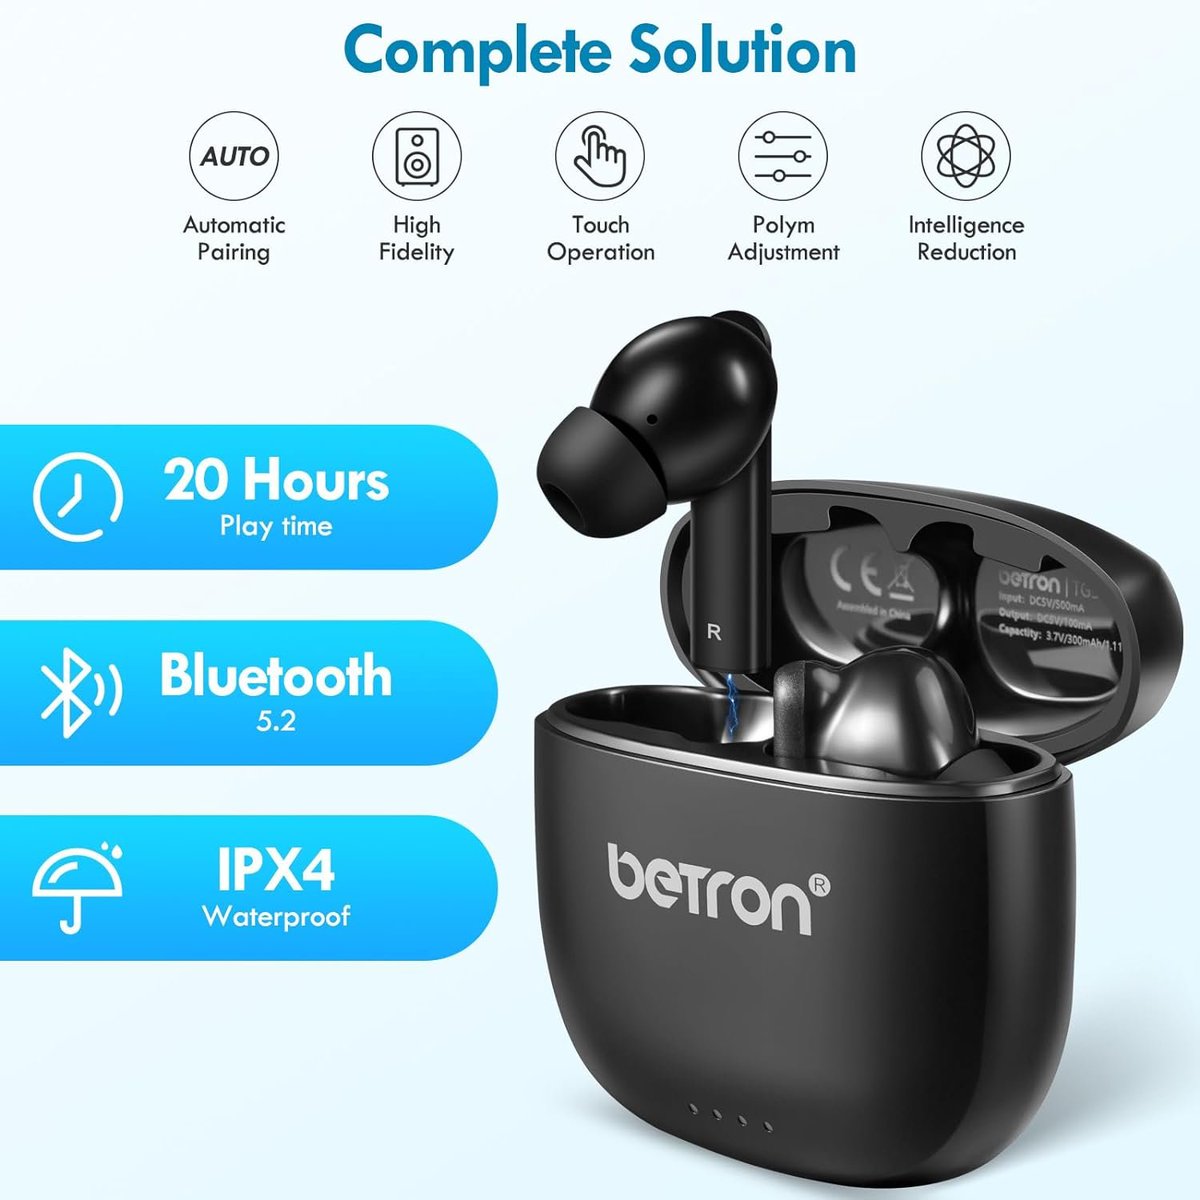 🎧 Betron TWS Wireless Bluetooth Earphones now just £5.45 (was £7.95) at Amazon: stock-checker.com/deals/betron-t… #Betron #WirelessEarphones #AmazonDeal